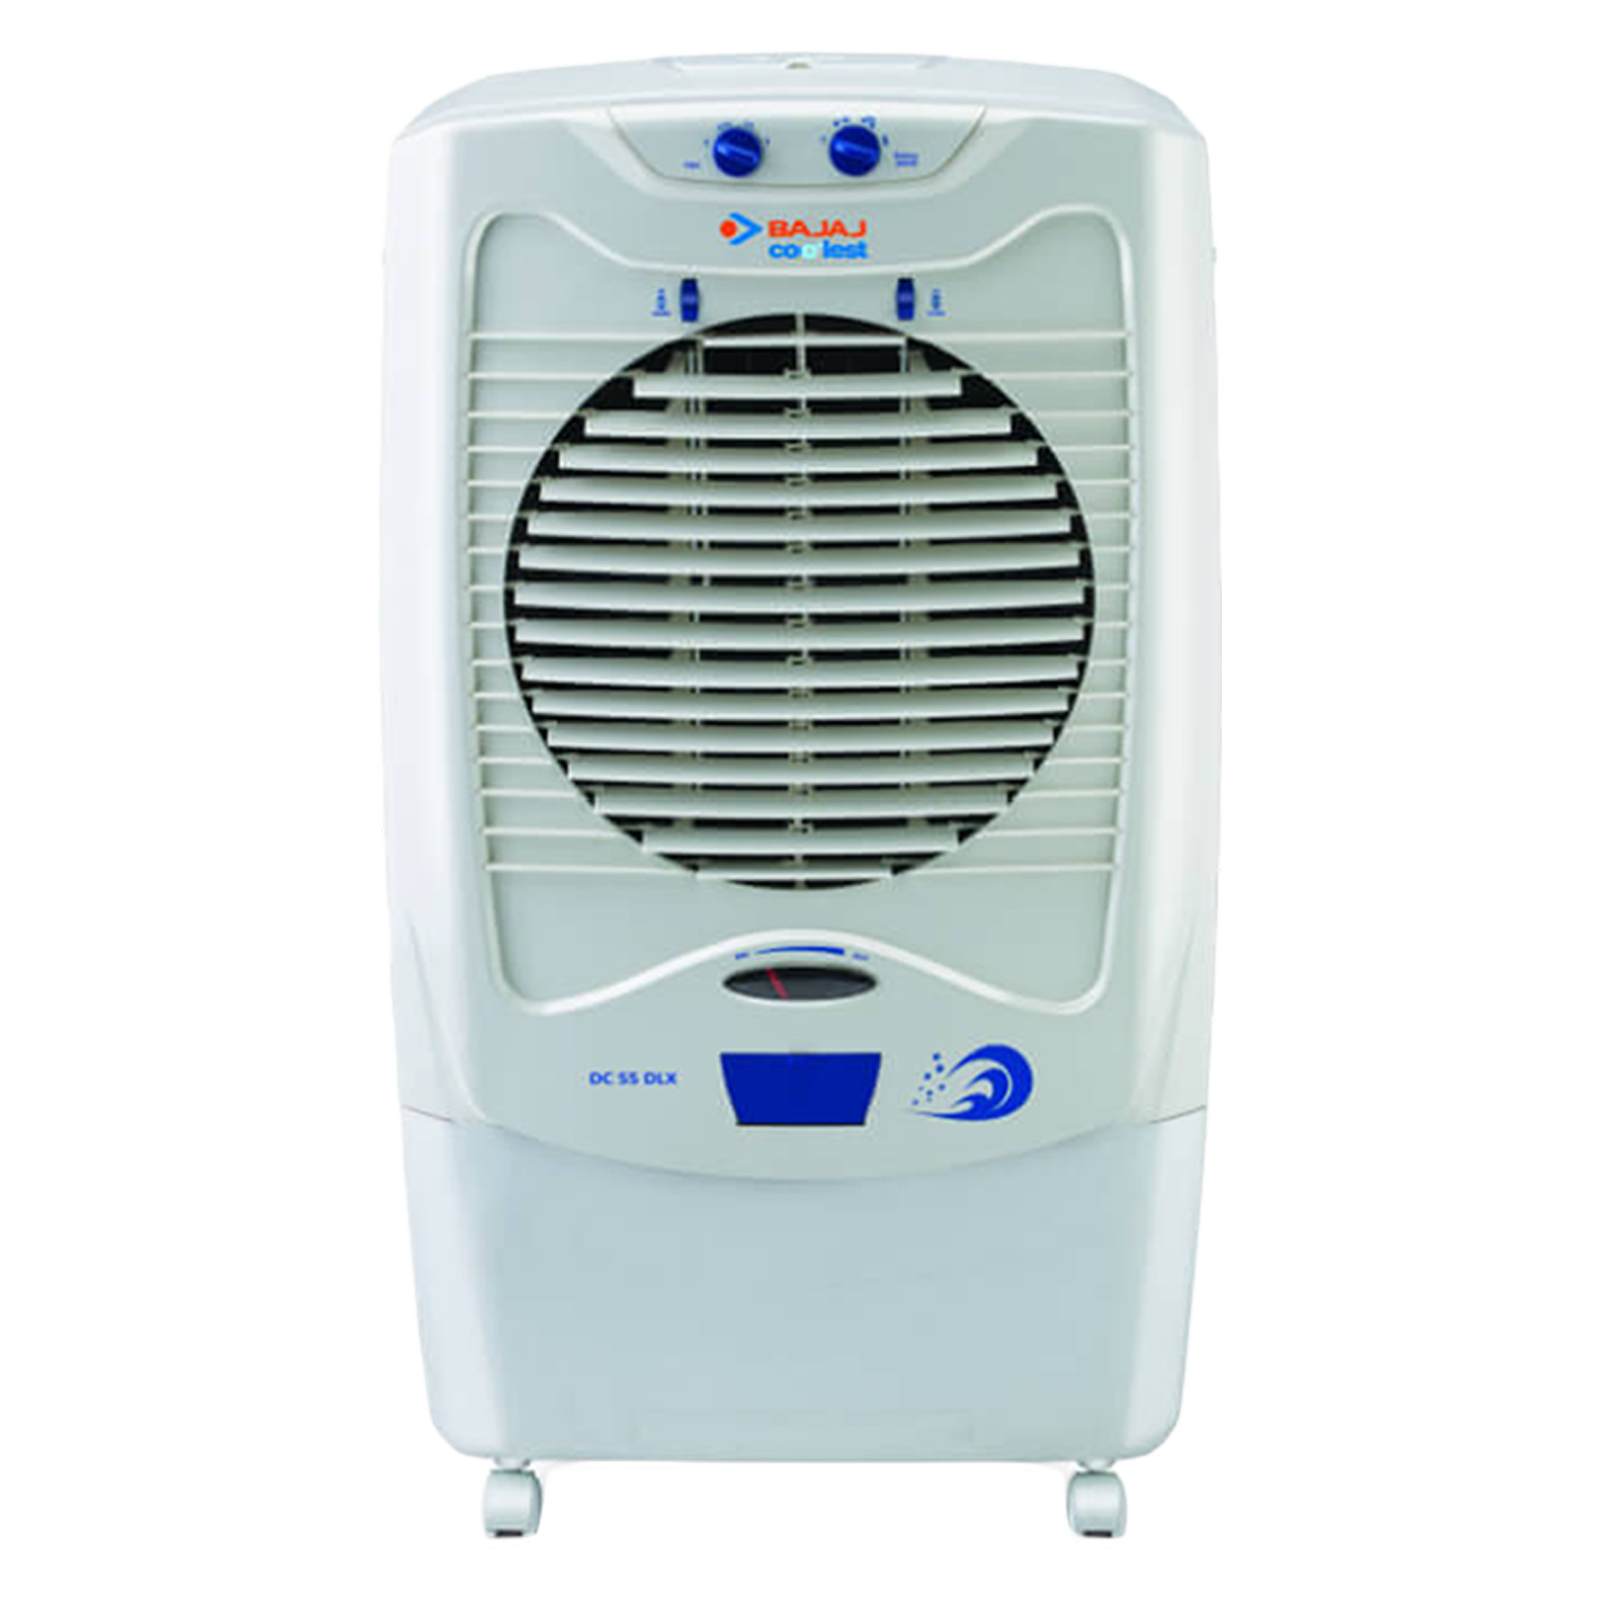 Bajaj Glacier 54 Litres Desert Air Cooler (Anti Bacterial Honeycomb, DC 55 DLX New, White)